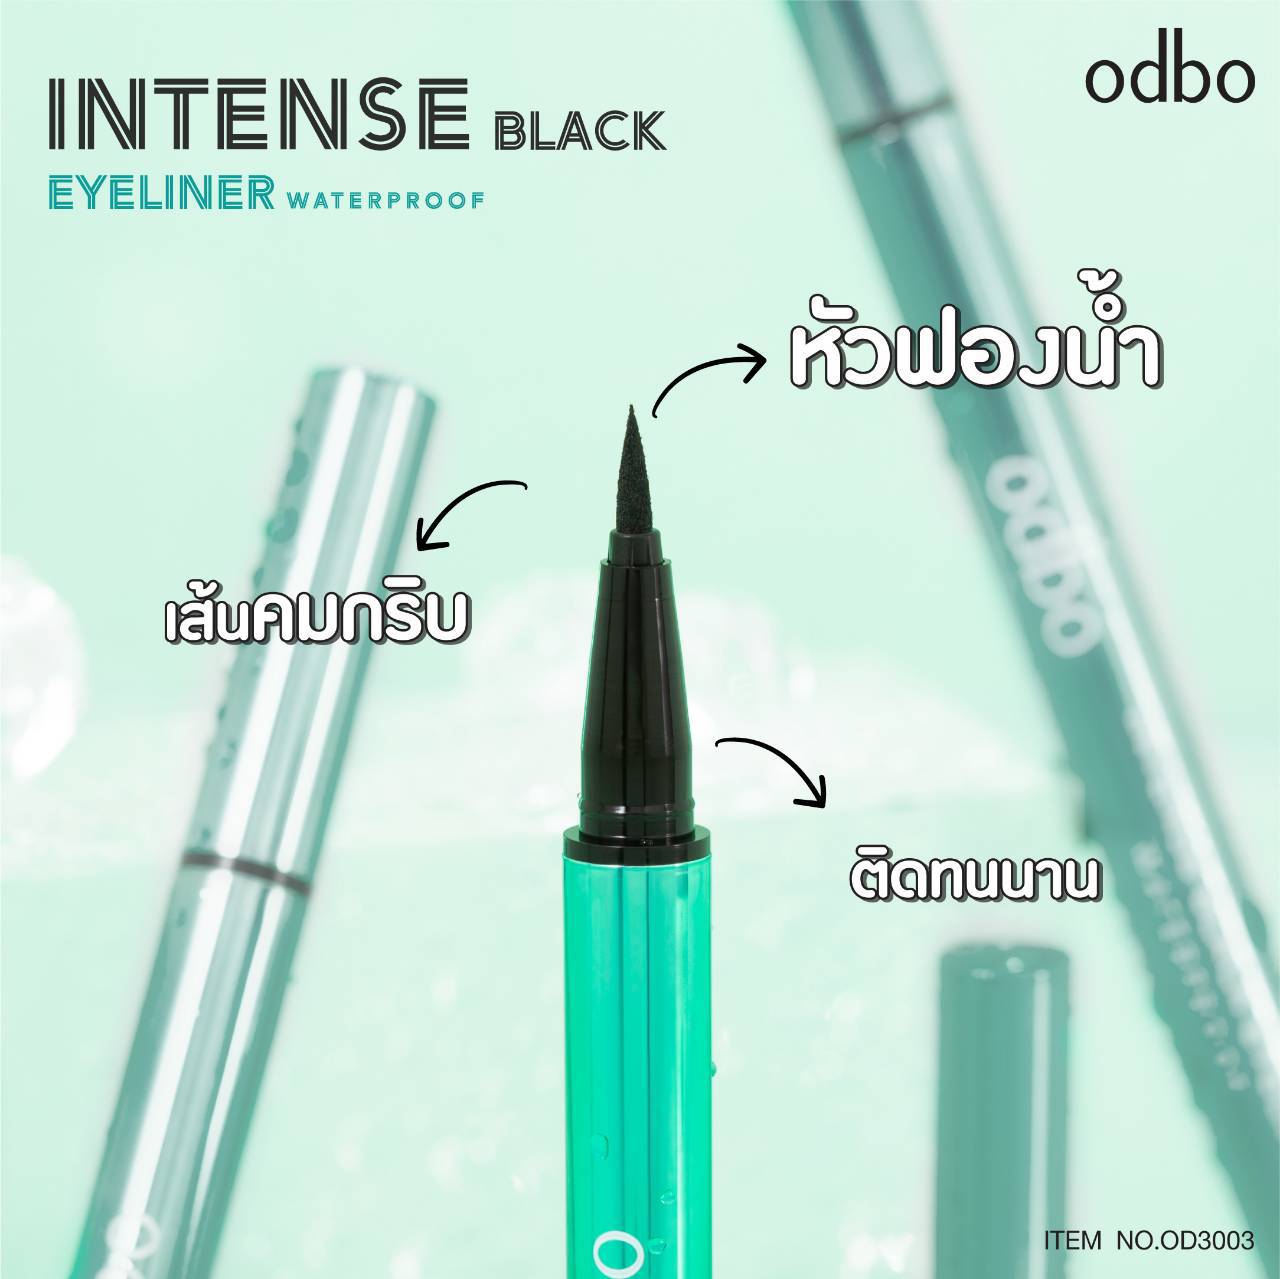 Odbo Intense Black Eyeliner #OD3003 : โอดีบีโอ อินเท้นซ์ แบล็ค อายไลเนอร์ เขียว x 1 ชิ้น